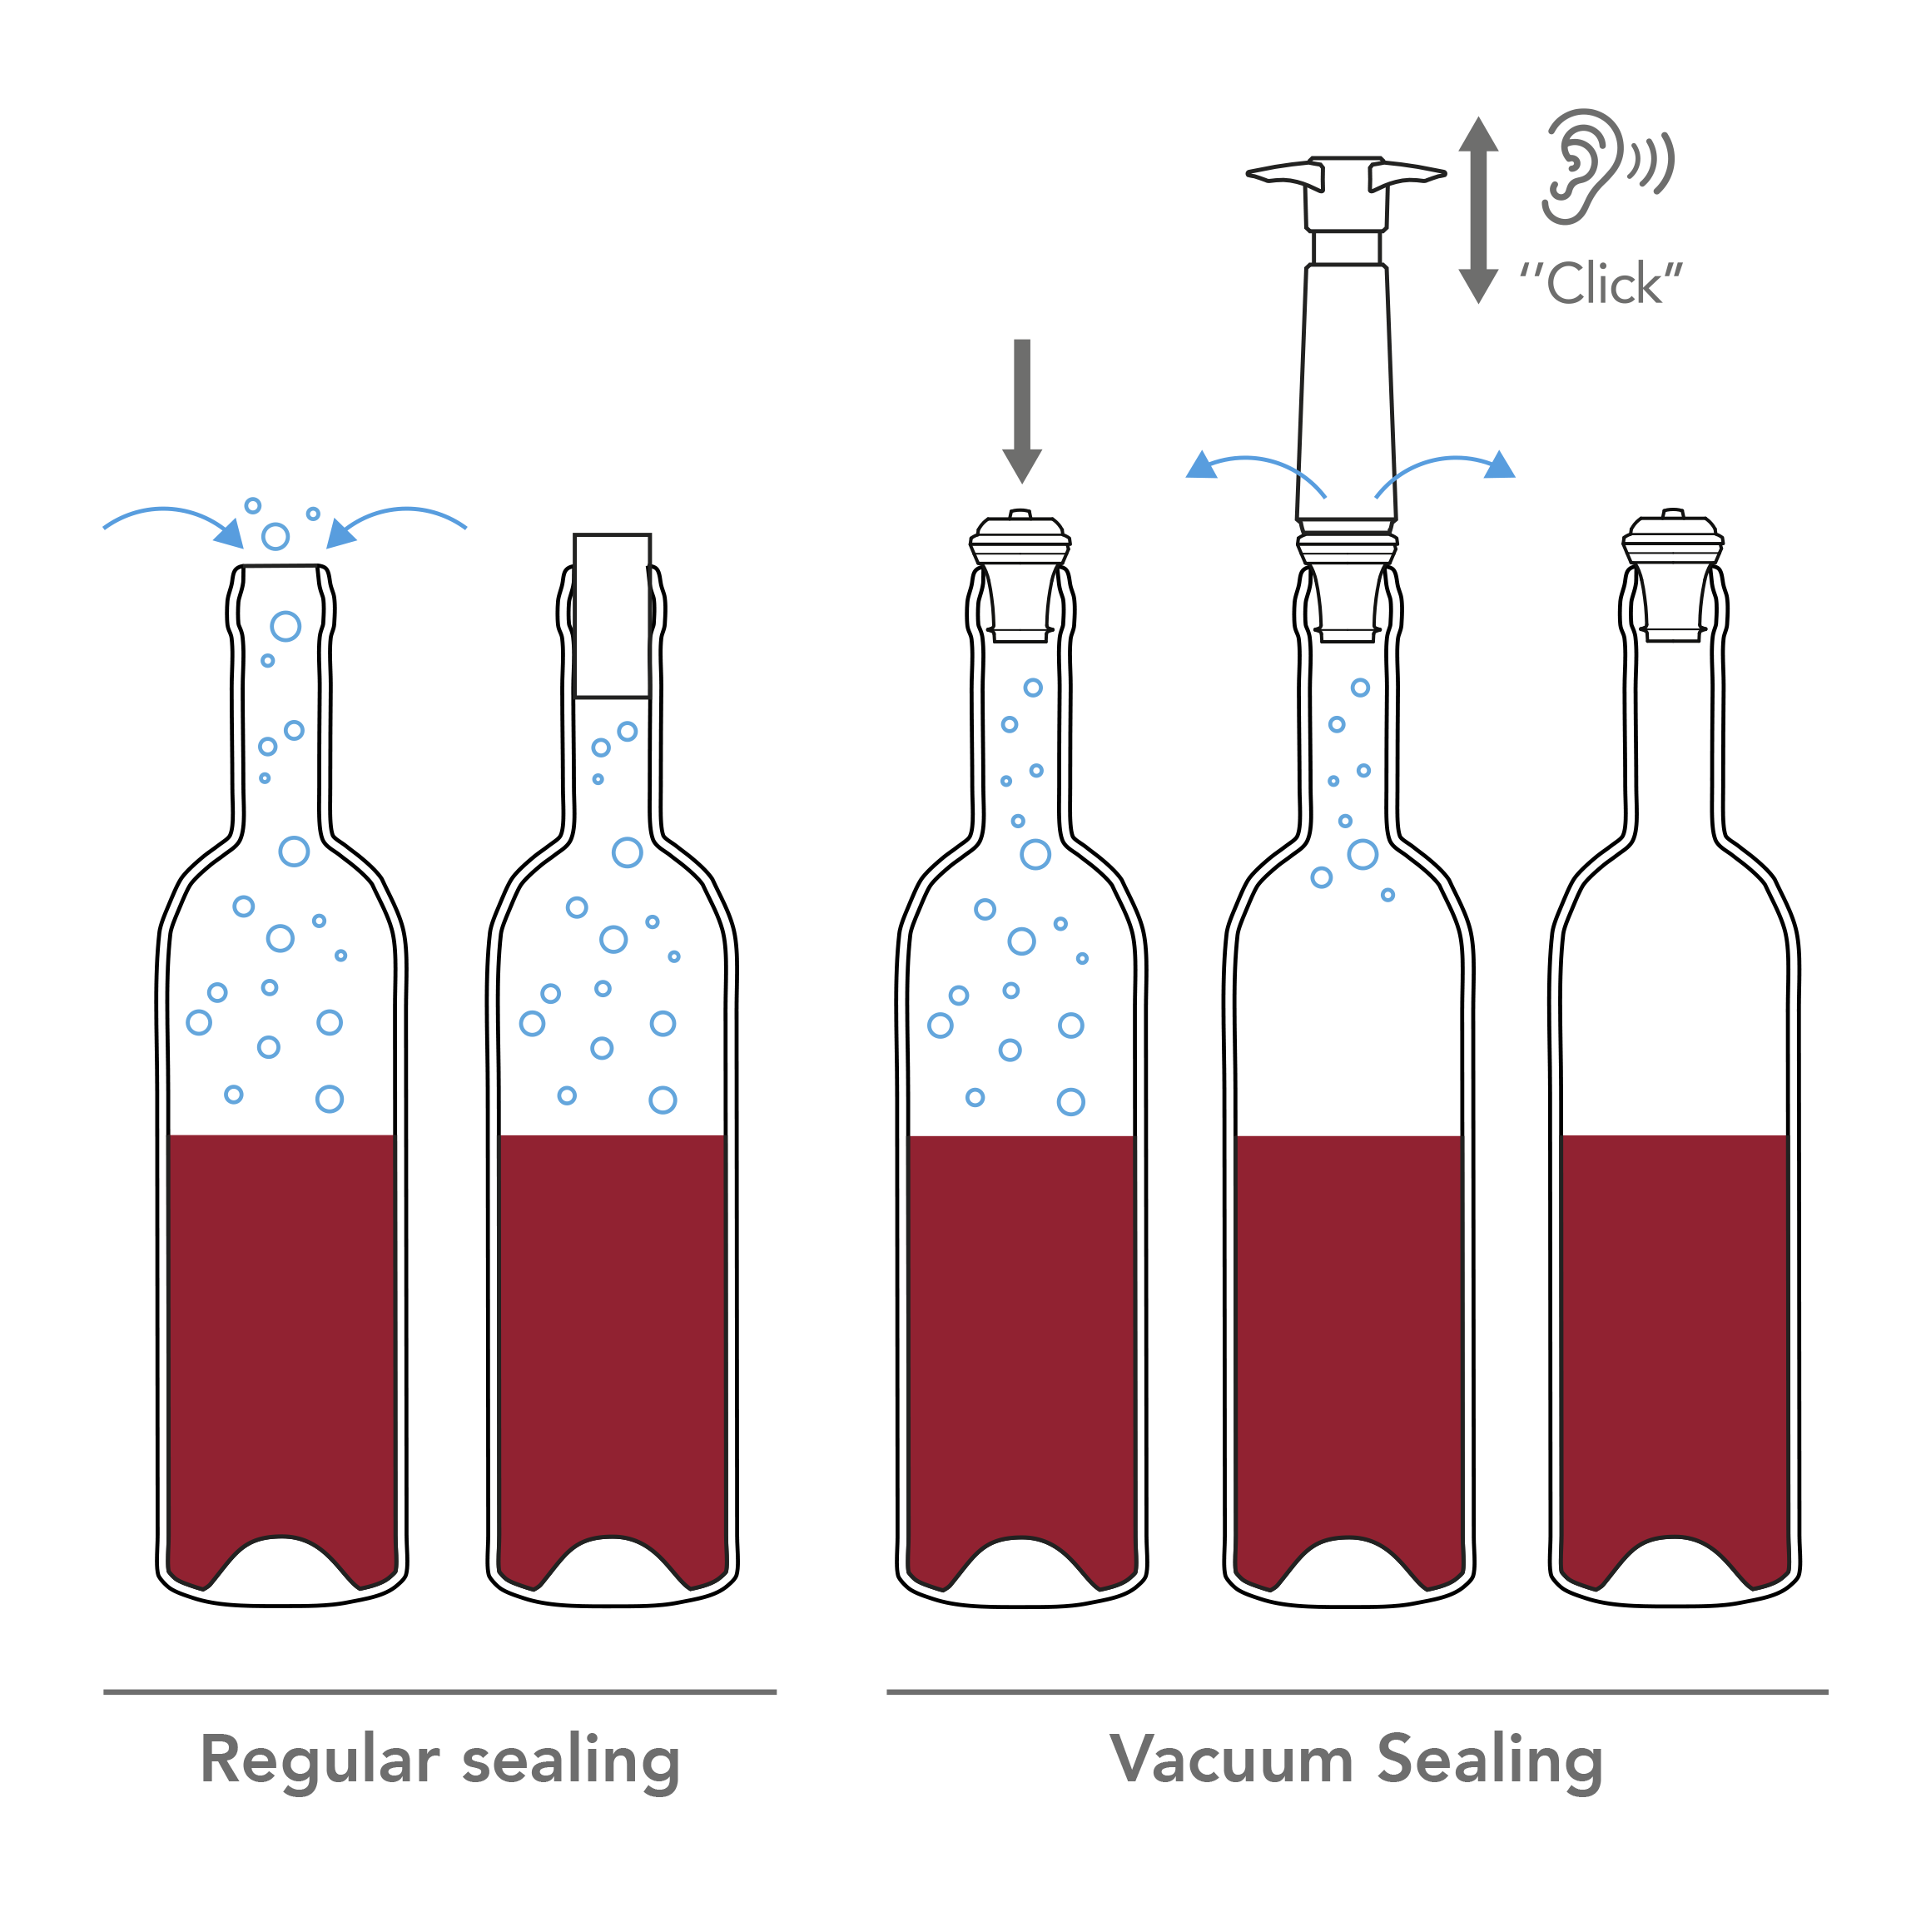 Reusable Bottle Vacuum Wine Sealer Preserver Saver Pump+2 Stoppers Black  S 